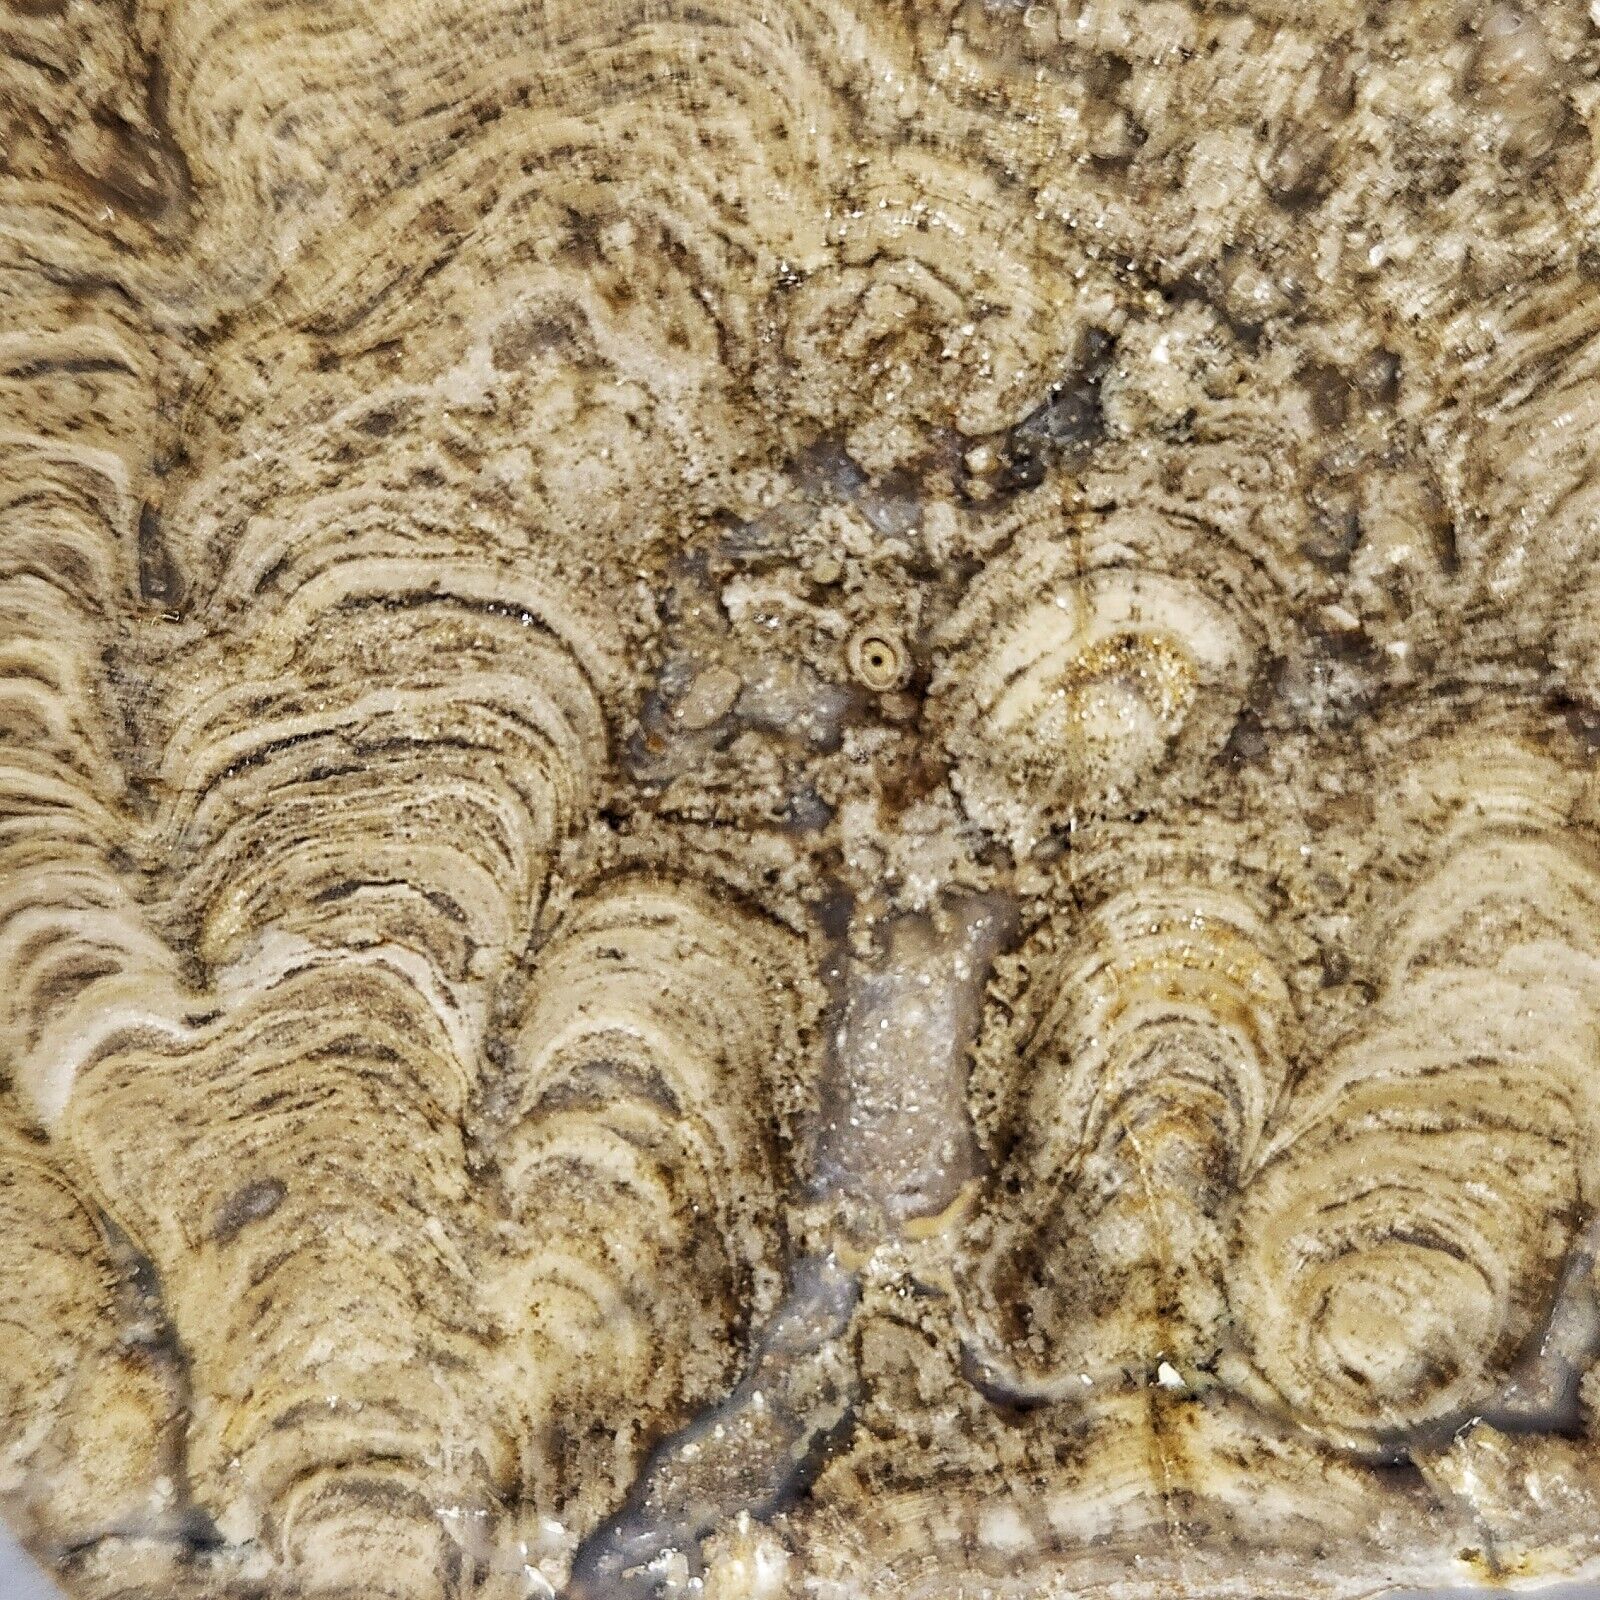 Rare Polished Stromatolite Fossil, Flagstaff Limestone (Paleocene Age) USA, 285g